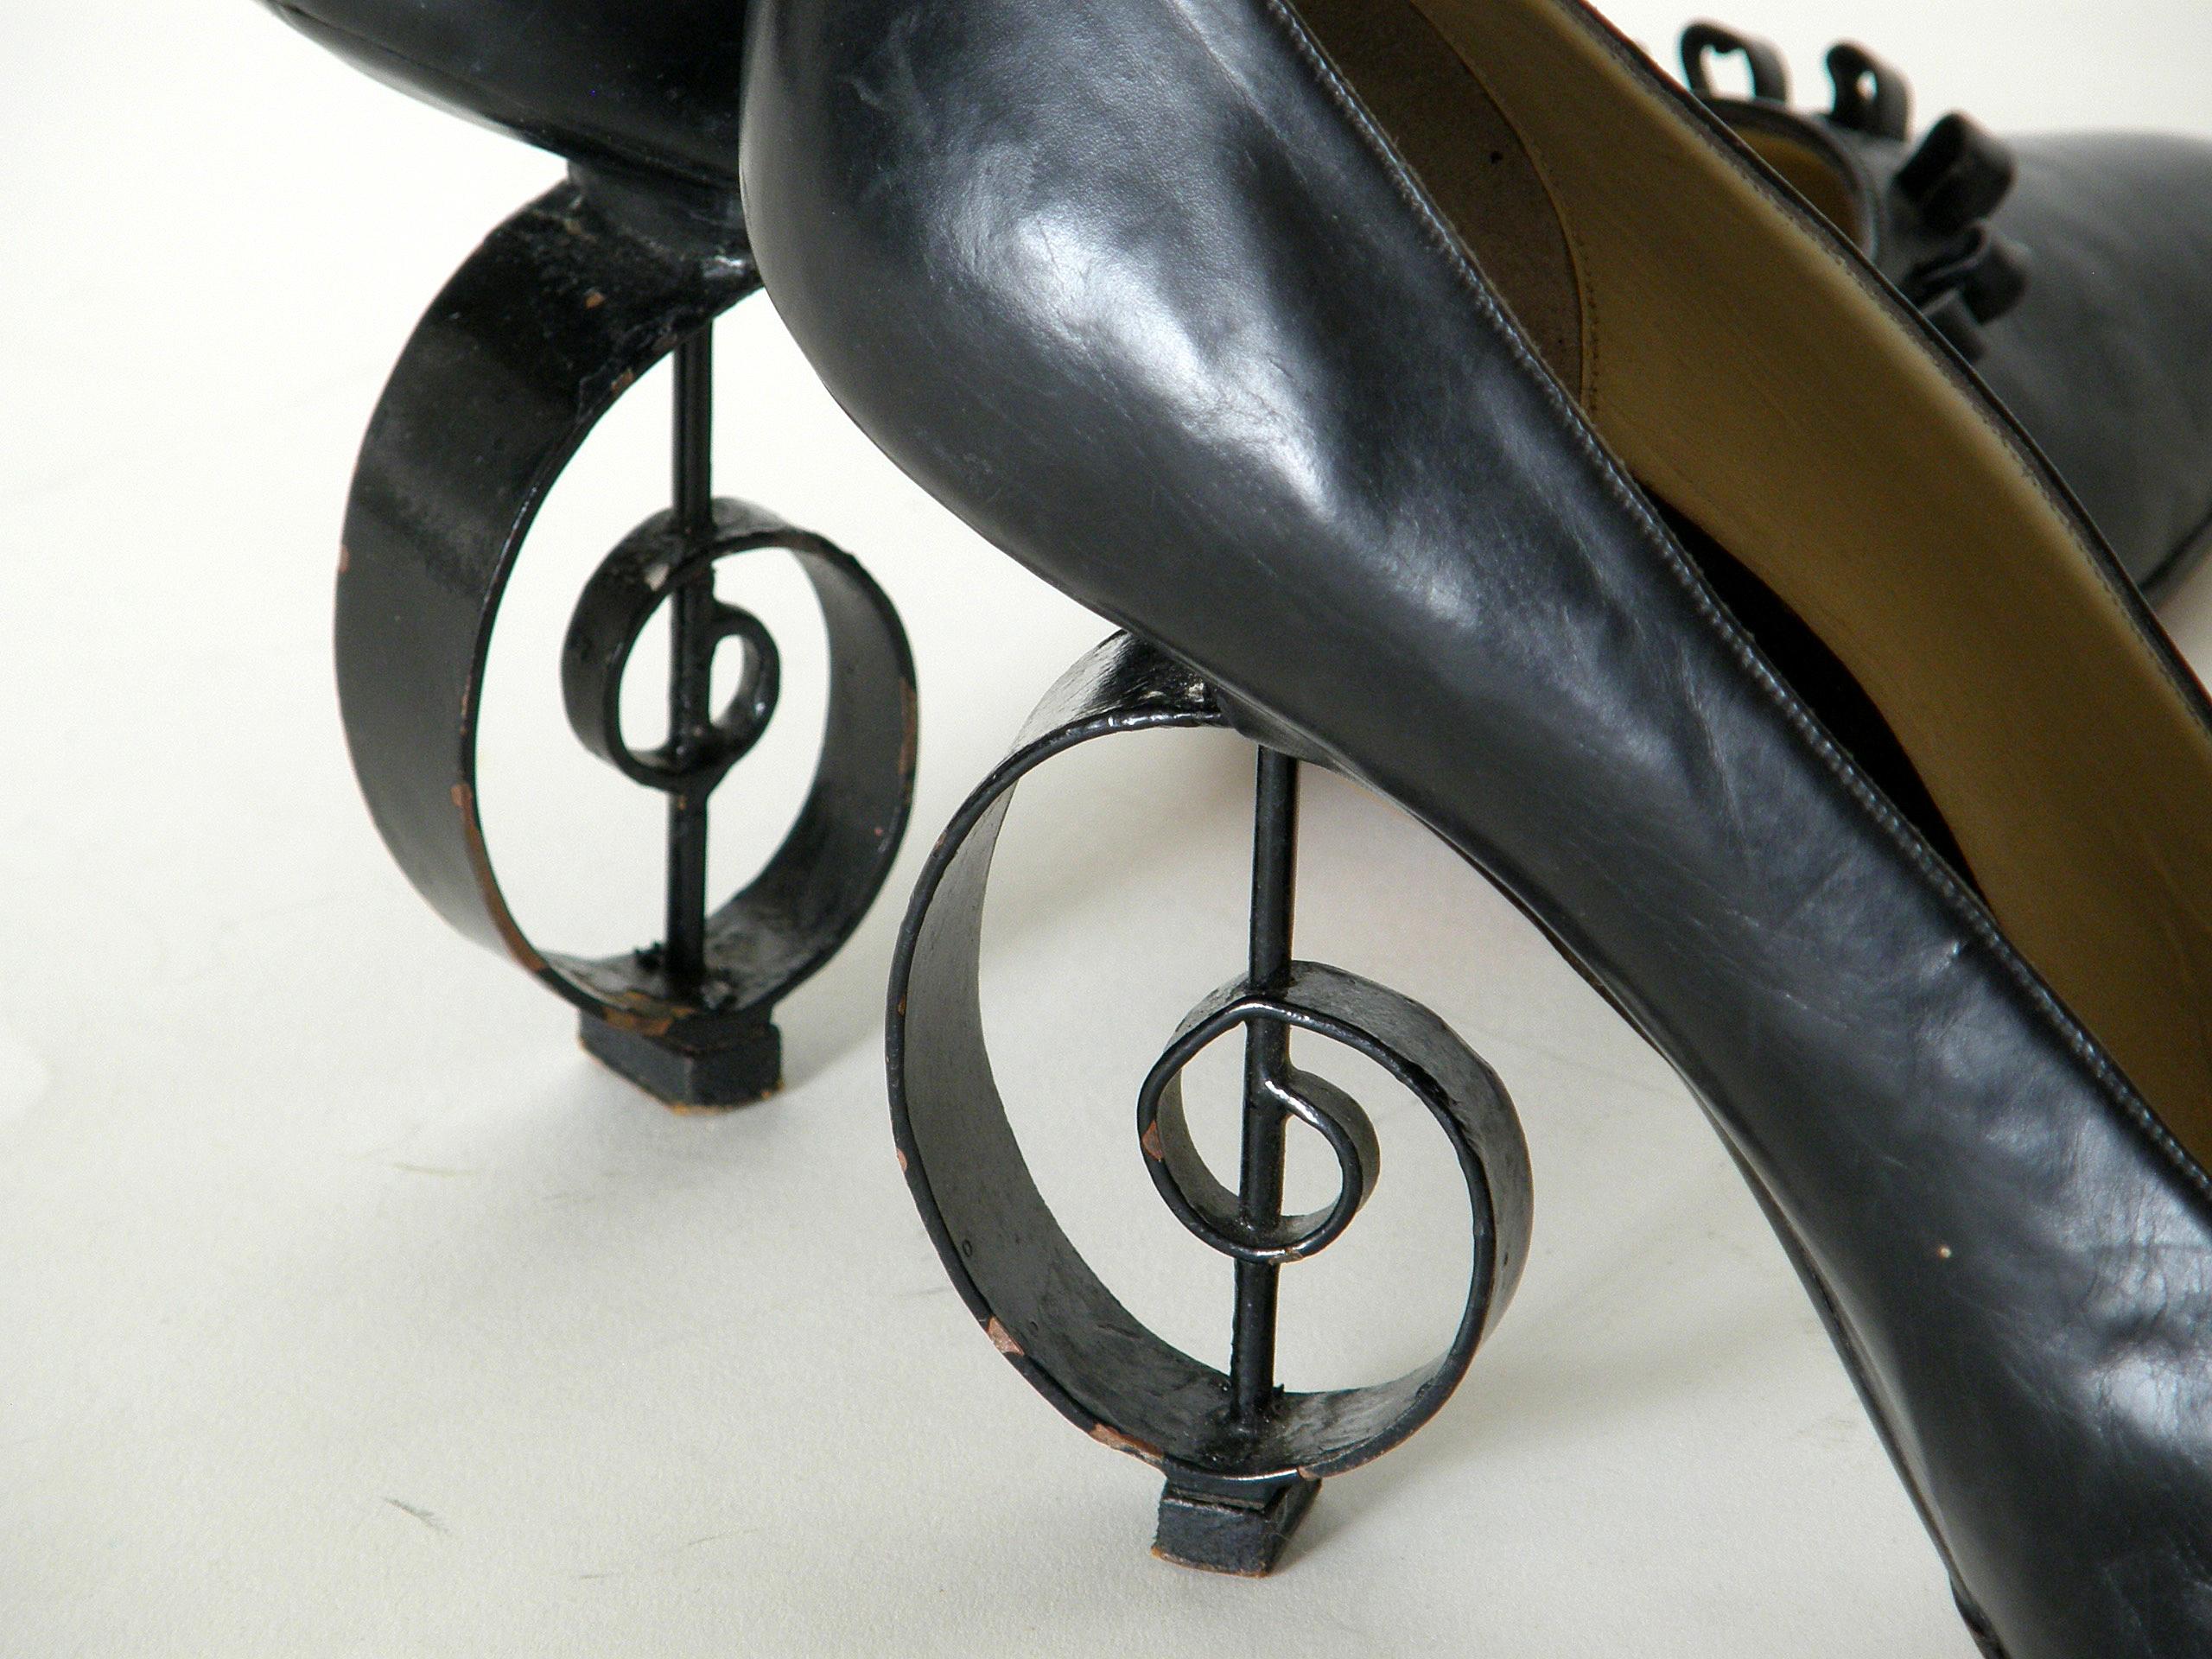 Women's Unworn Albion Black Leather Musical Theme Pumps with G-Clef Heel Design